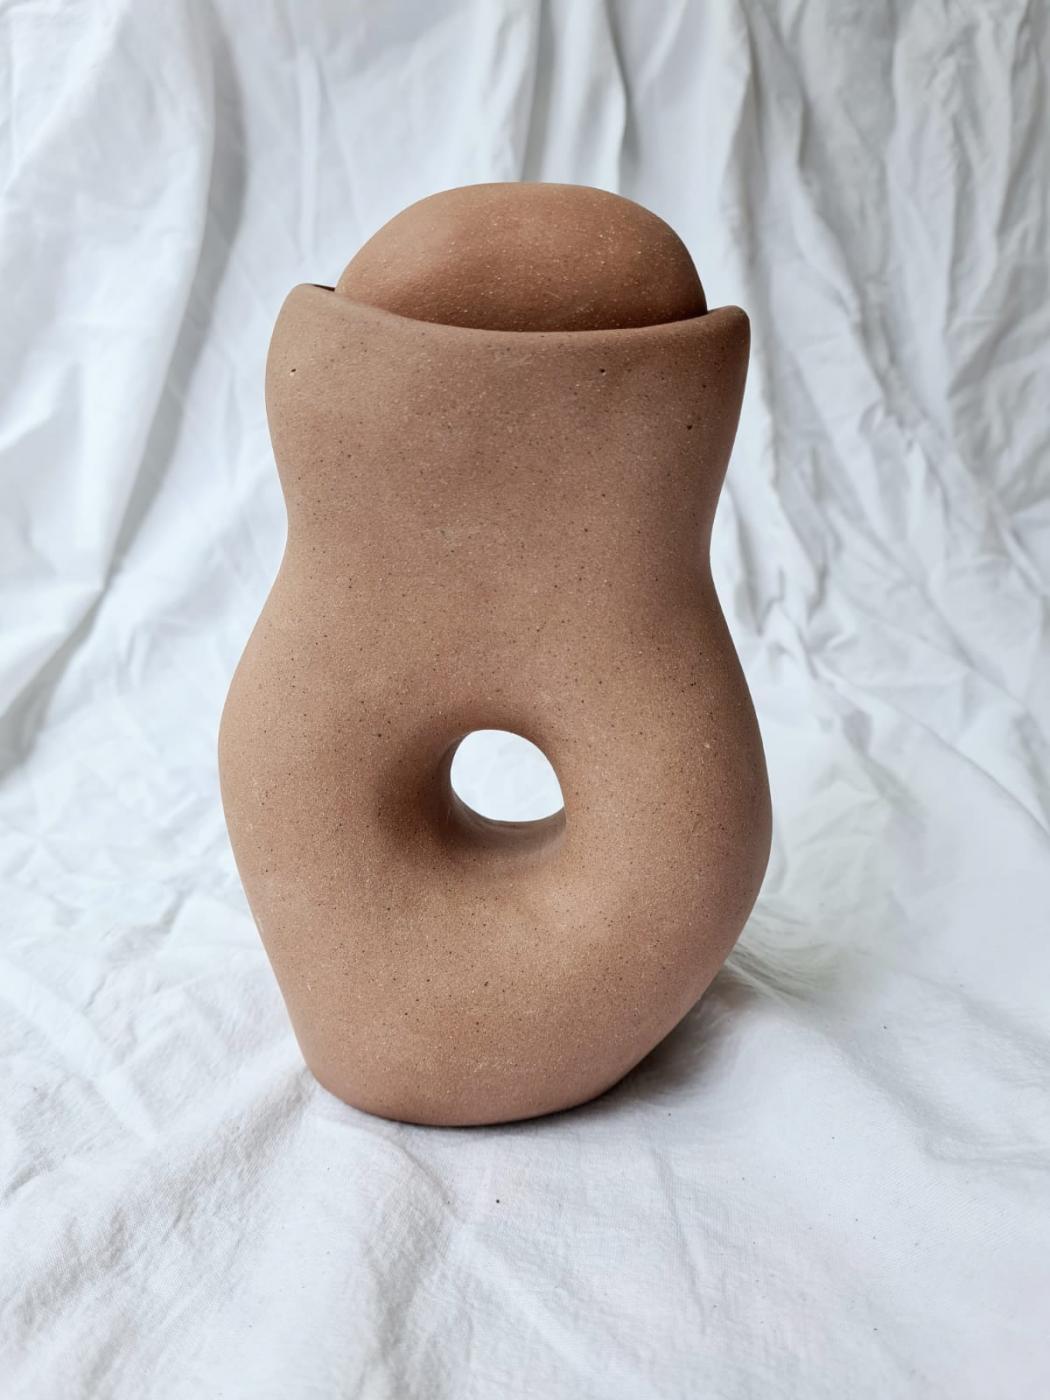 Brazilian Vase/sculpture n°4 - Hybrids series For Sale